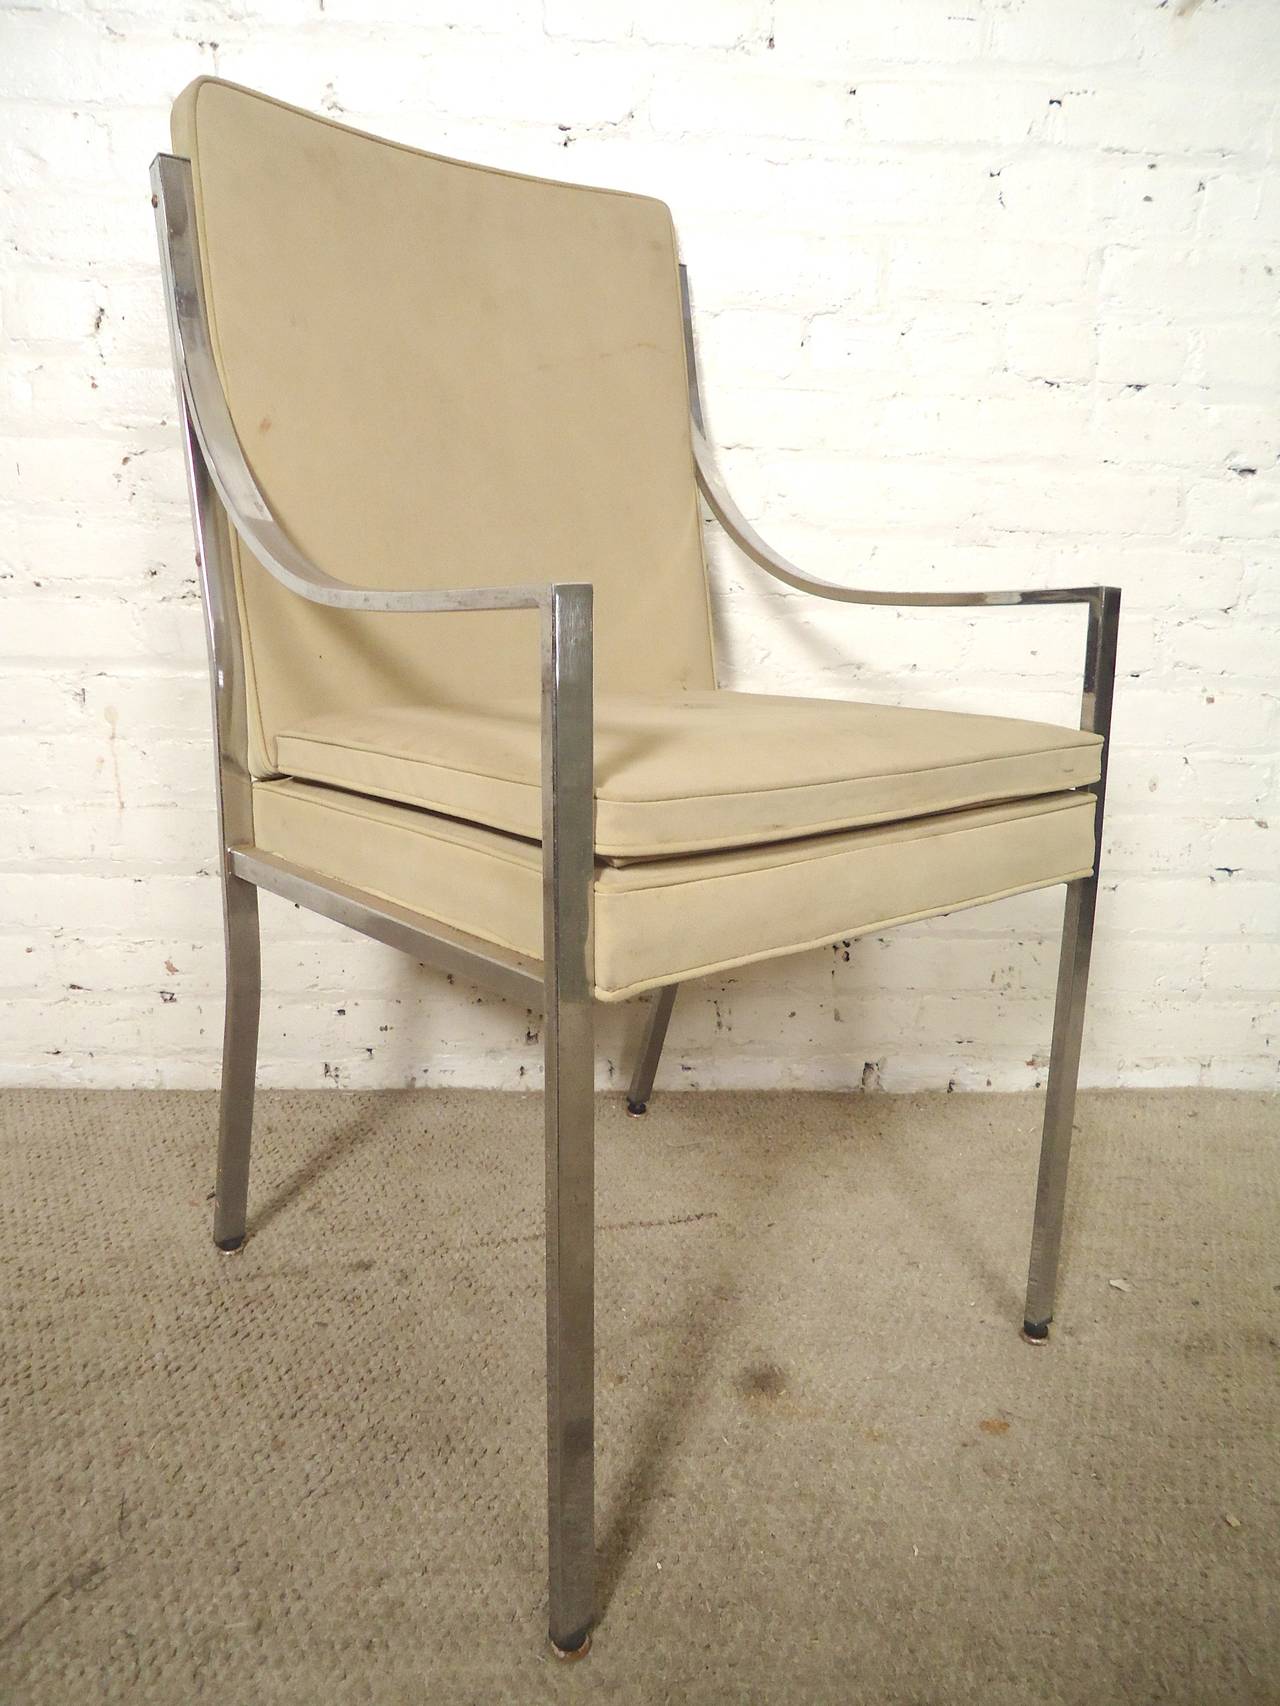 Mid-20th Century Mid-Century Modern Chrome Chairs